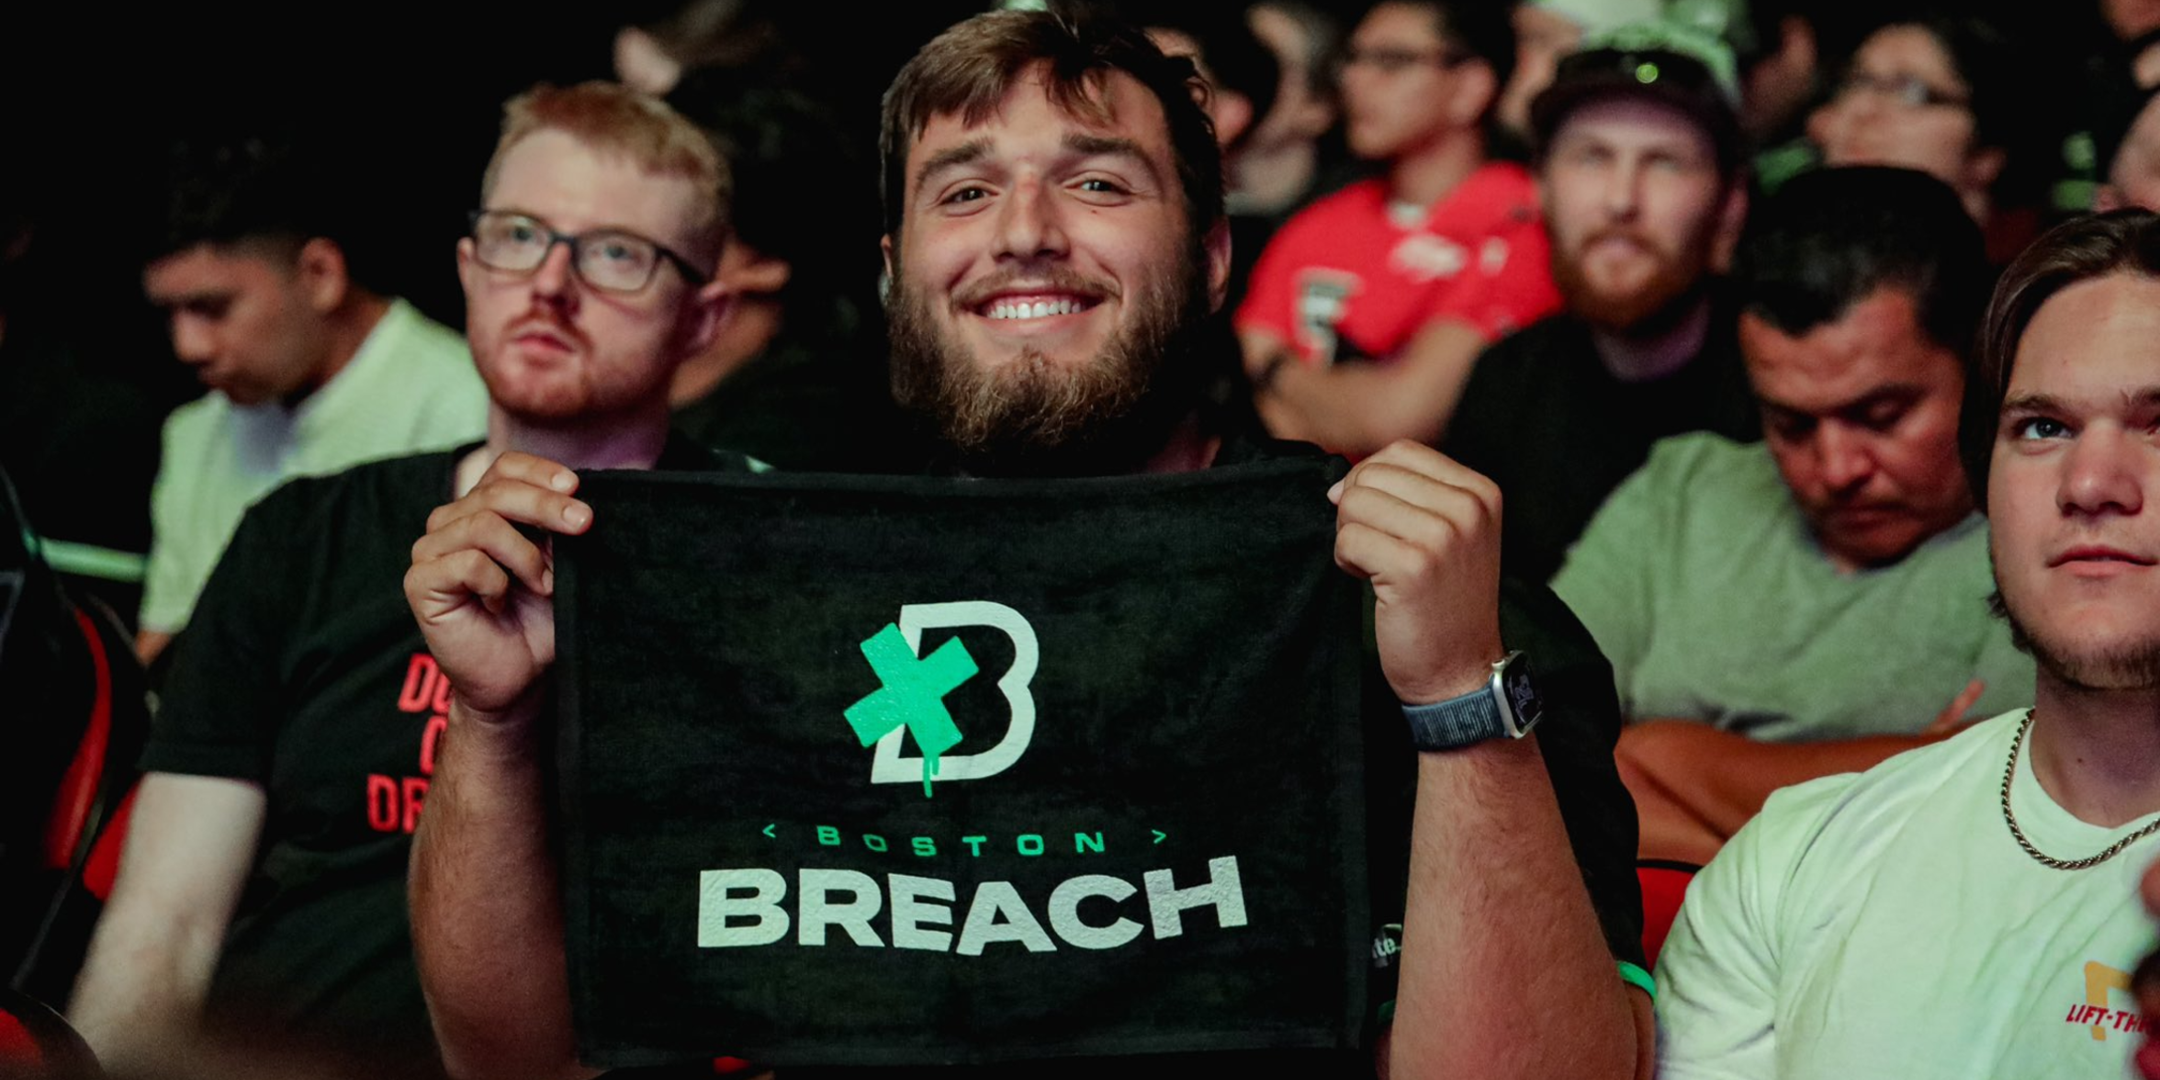 Boston Breach Fan with Boston Breach Towel